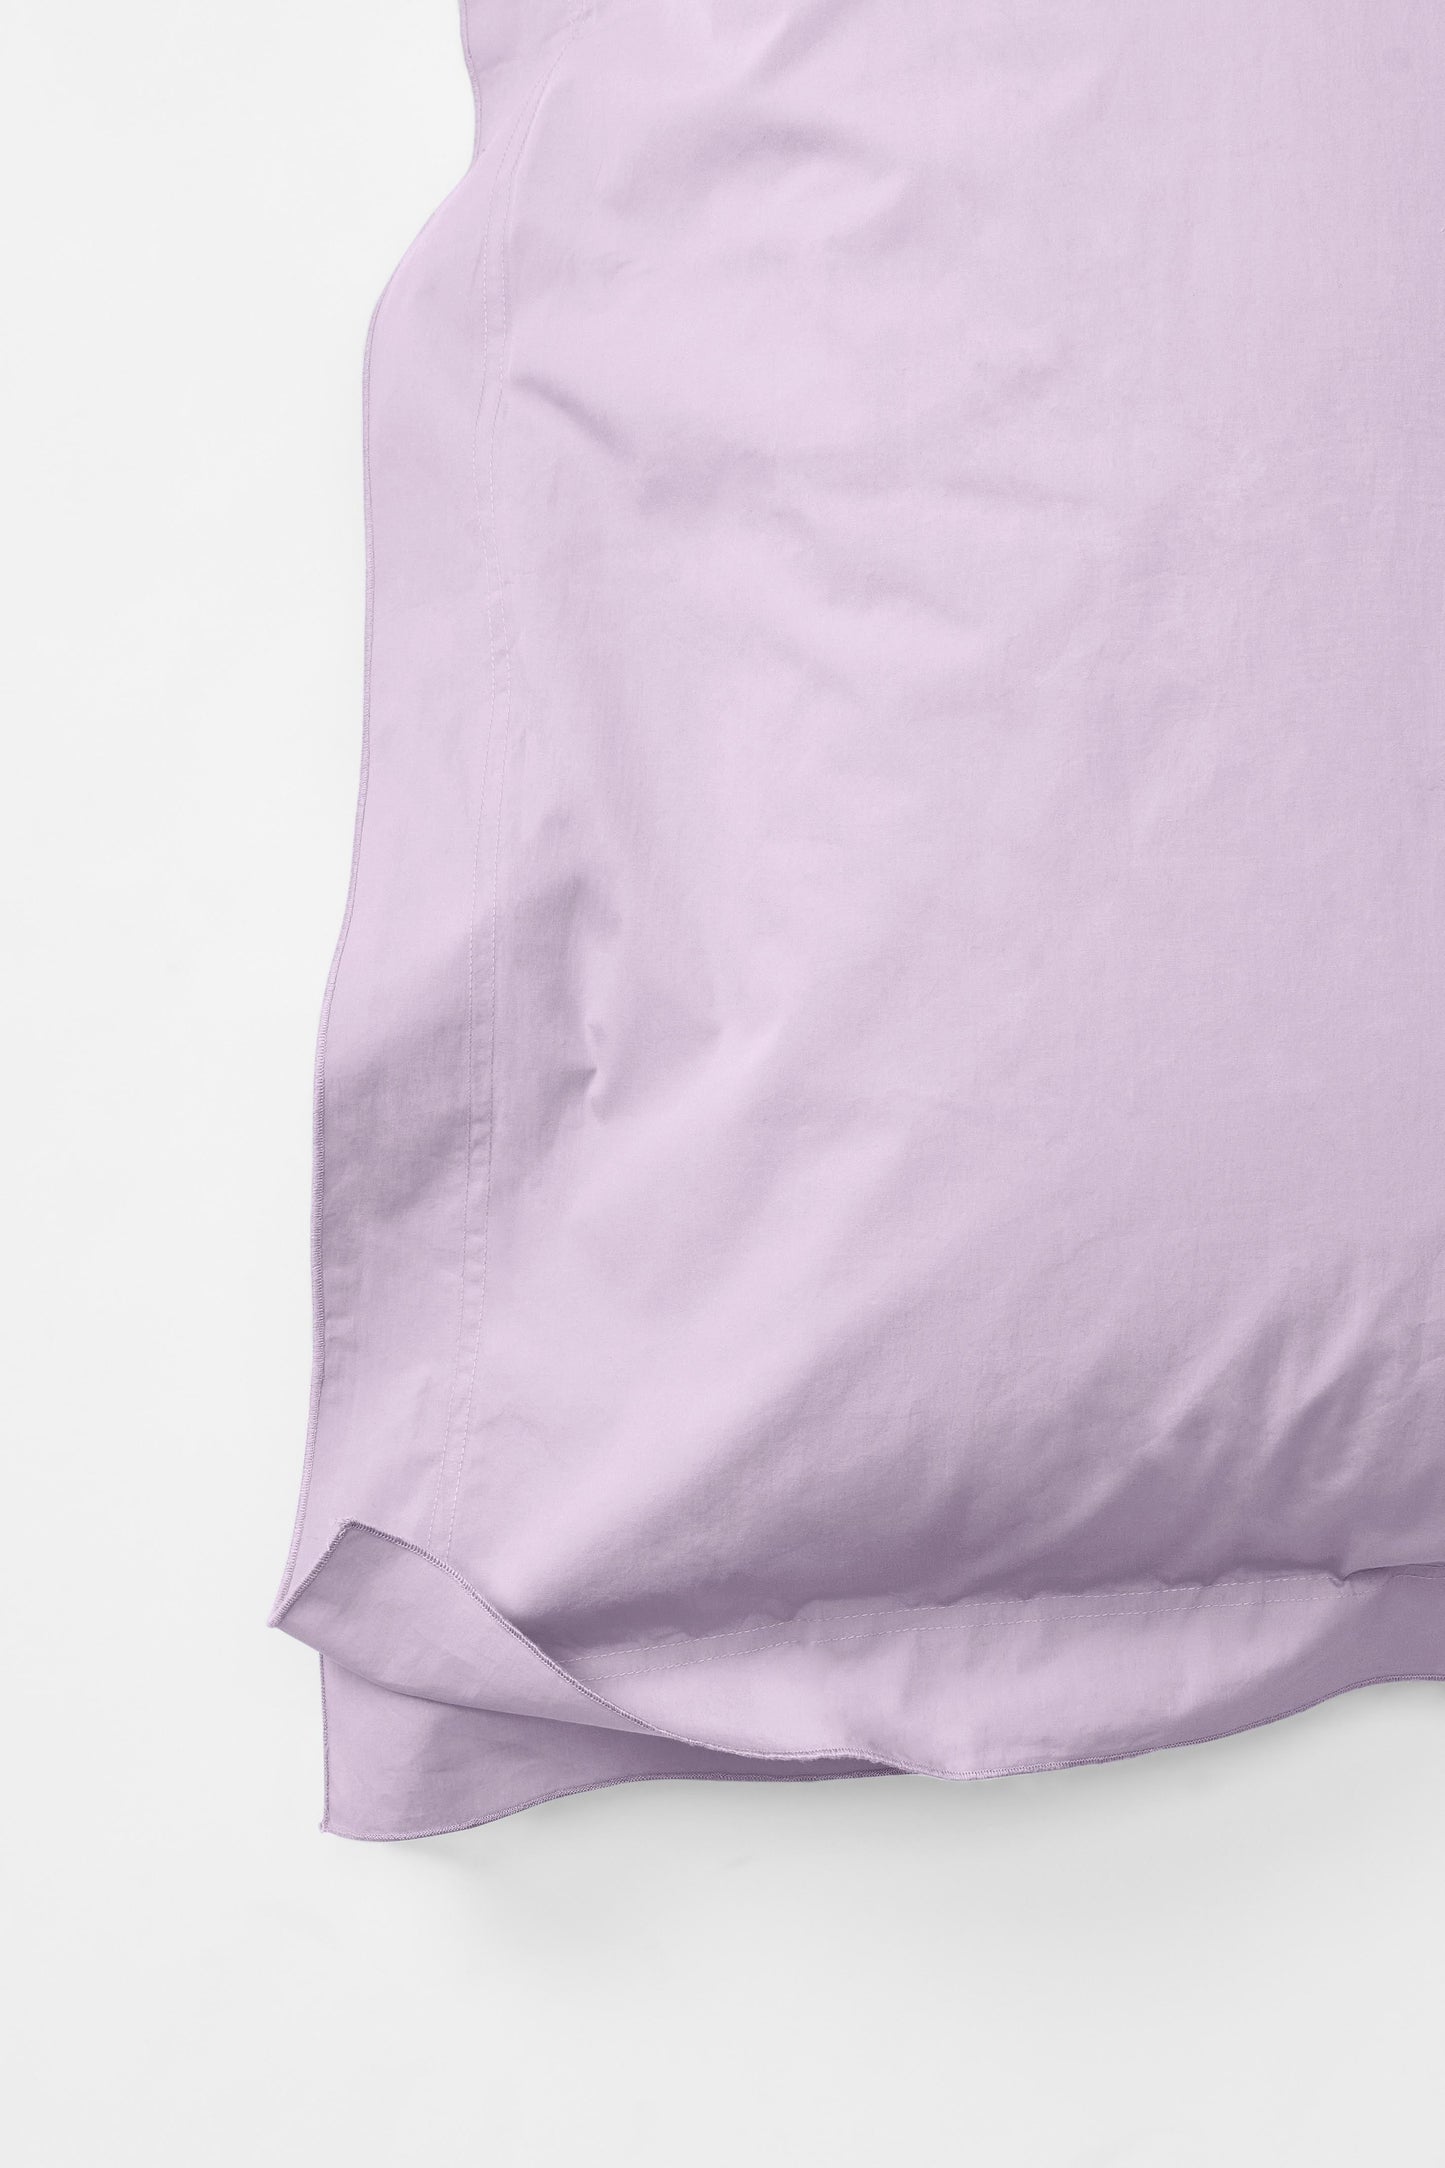 Mono Organic Cotton Percale Pillow Pair - Lilac Pillows in King Pillow